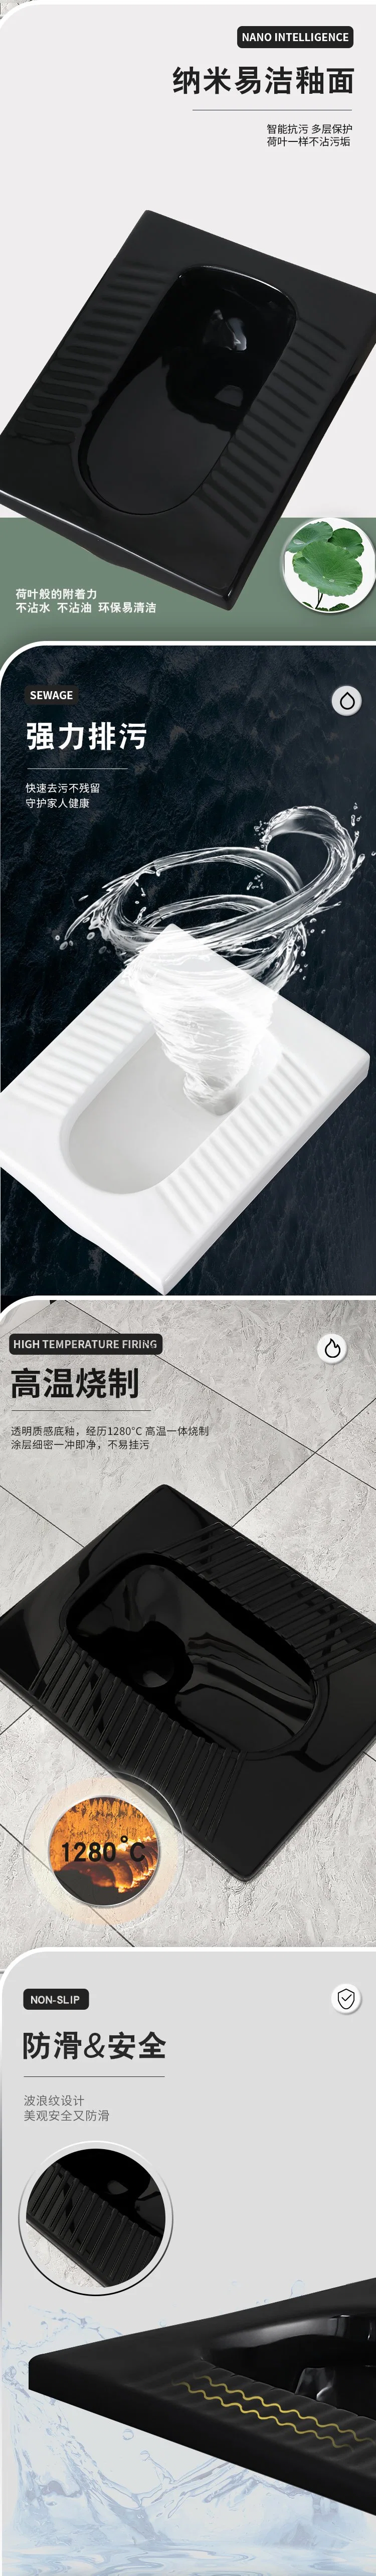 Squat Type Water Closet Sanitary Ware Toilet Ceramic Squatting Pan